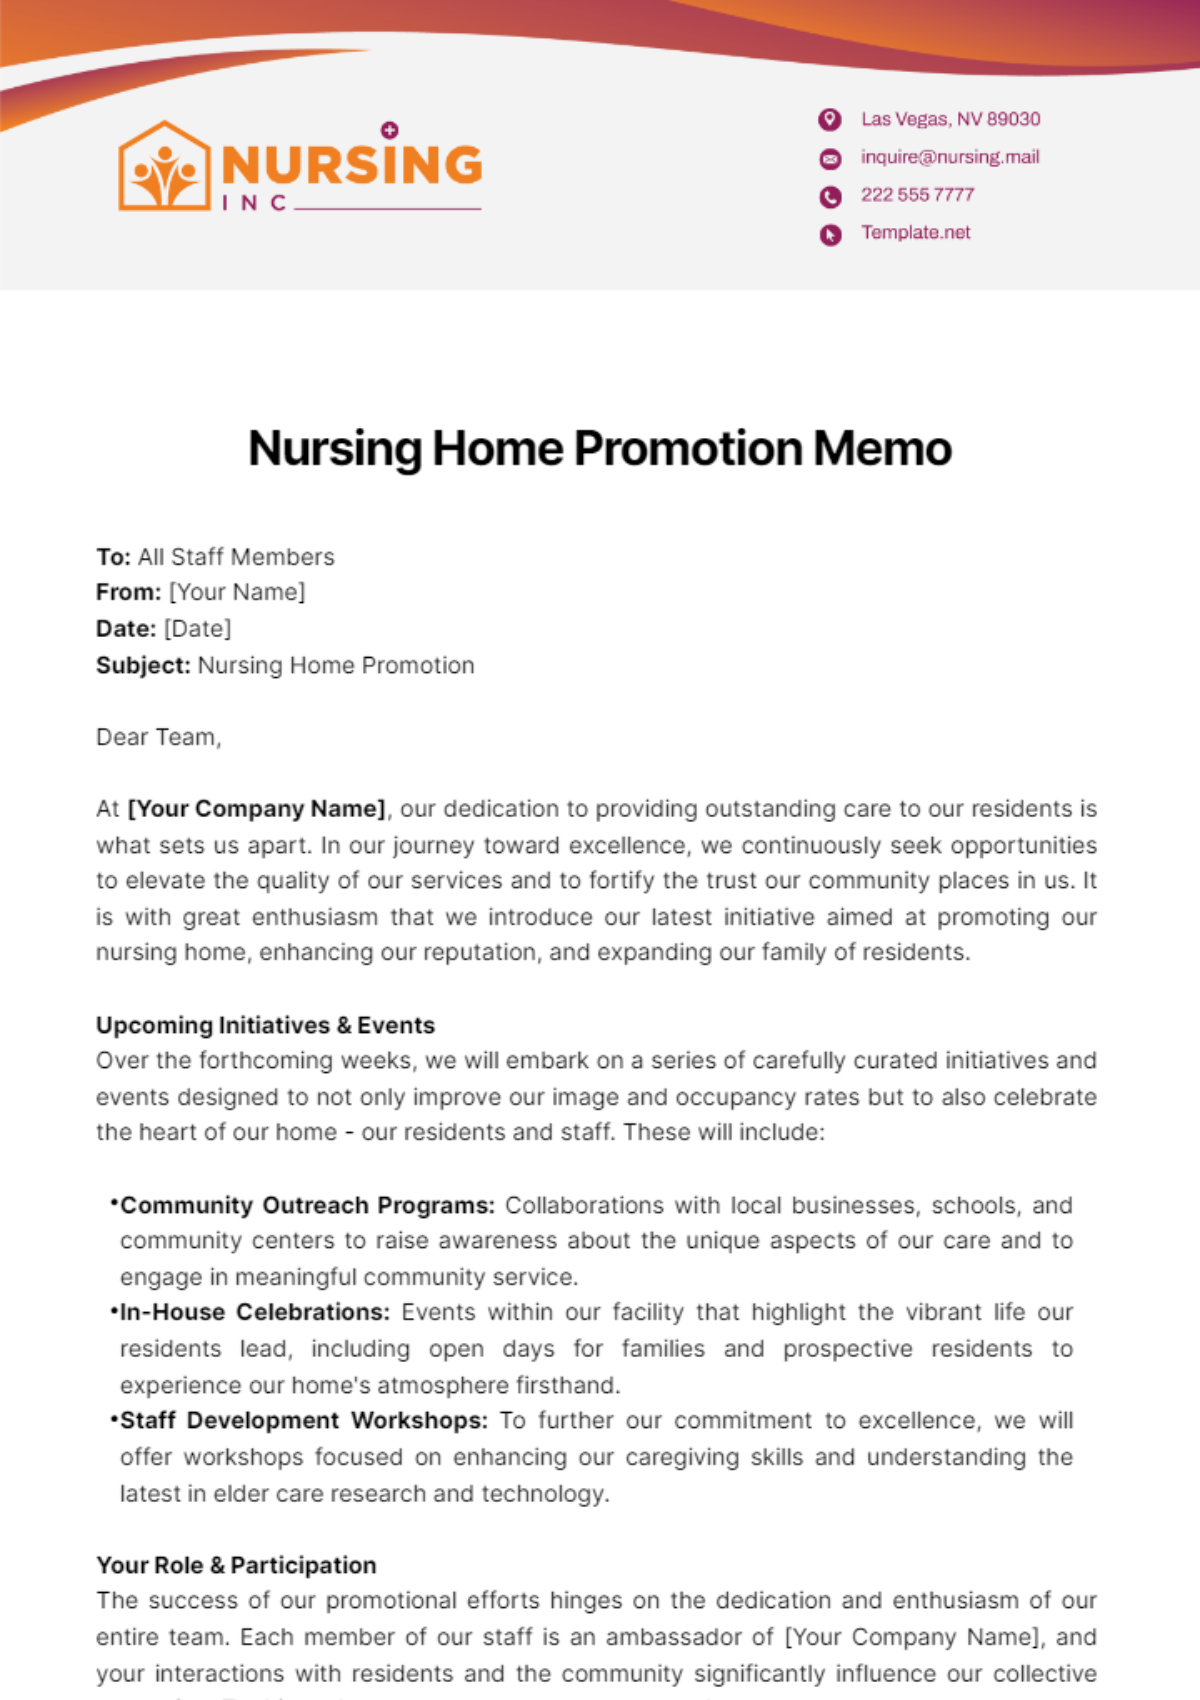 Nursing Home Promotion Memo Template